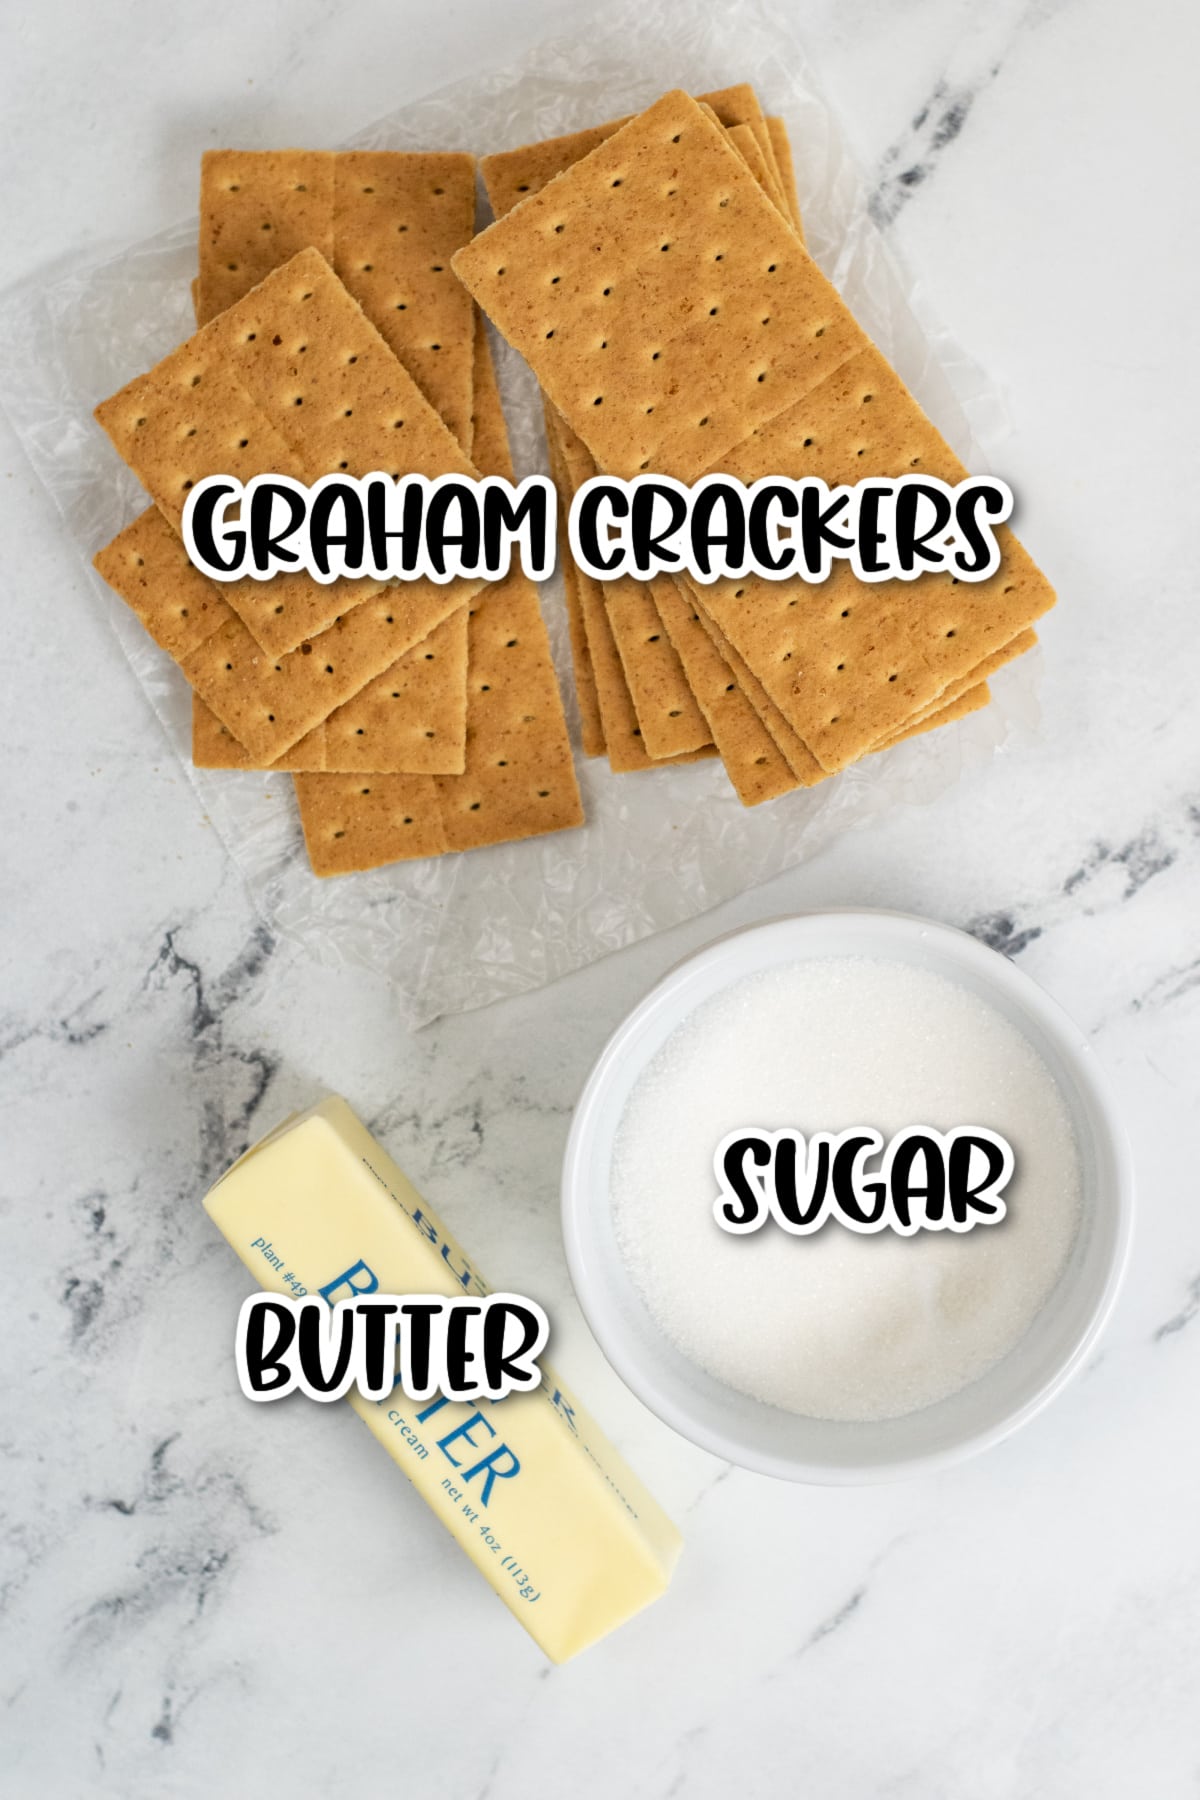 Ingredients for graham cracker crust